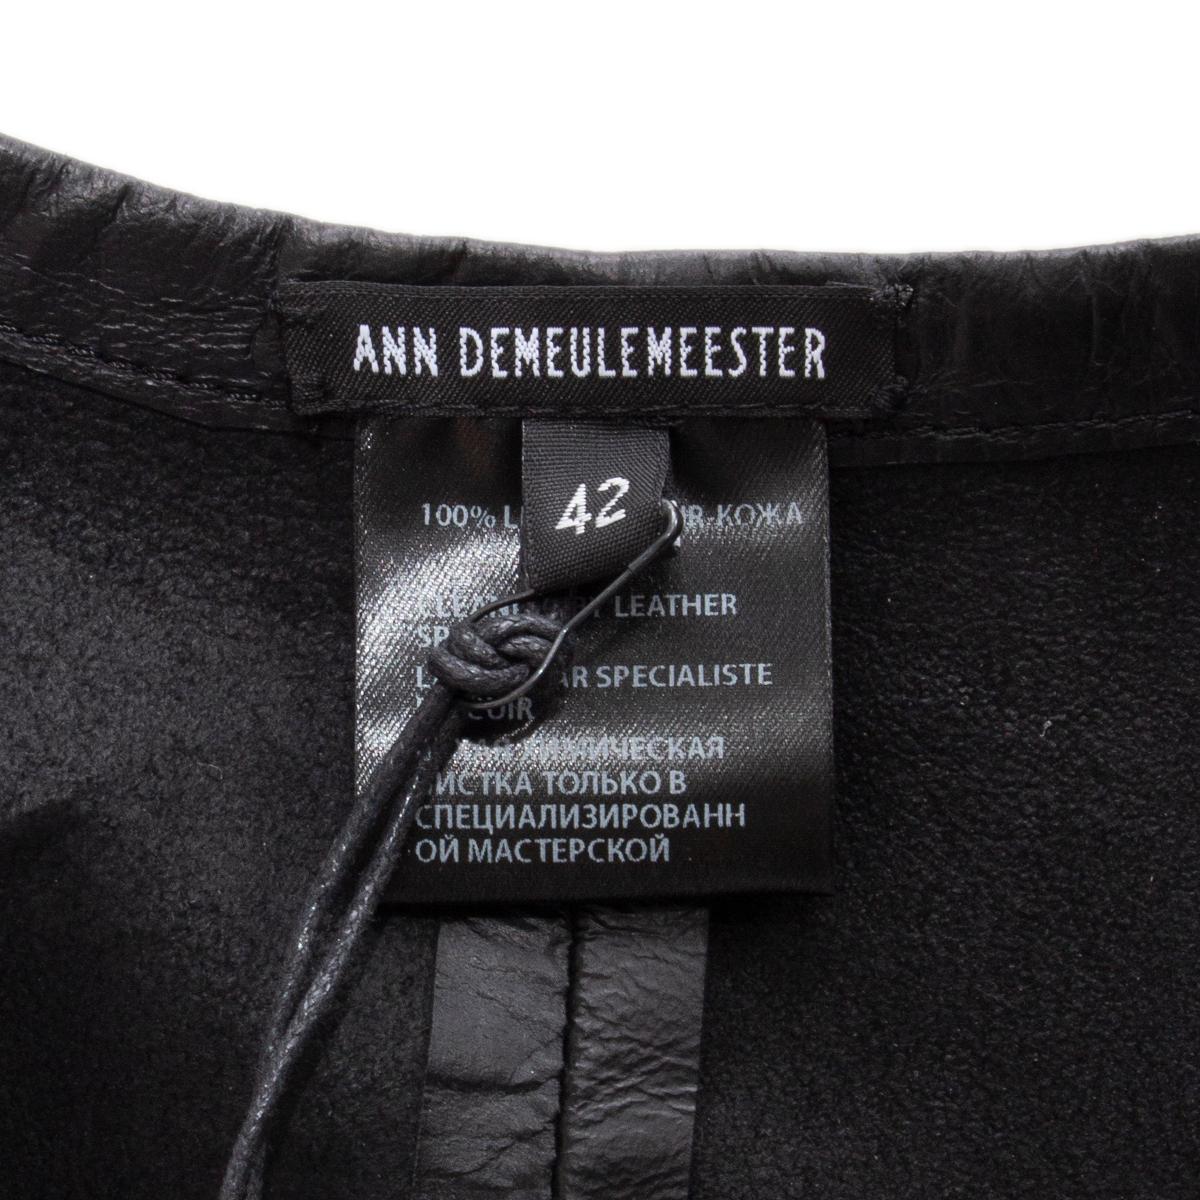 ANN DEMEULEMEESTER leather OPEN Jacket 42 L 1